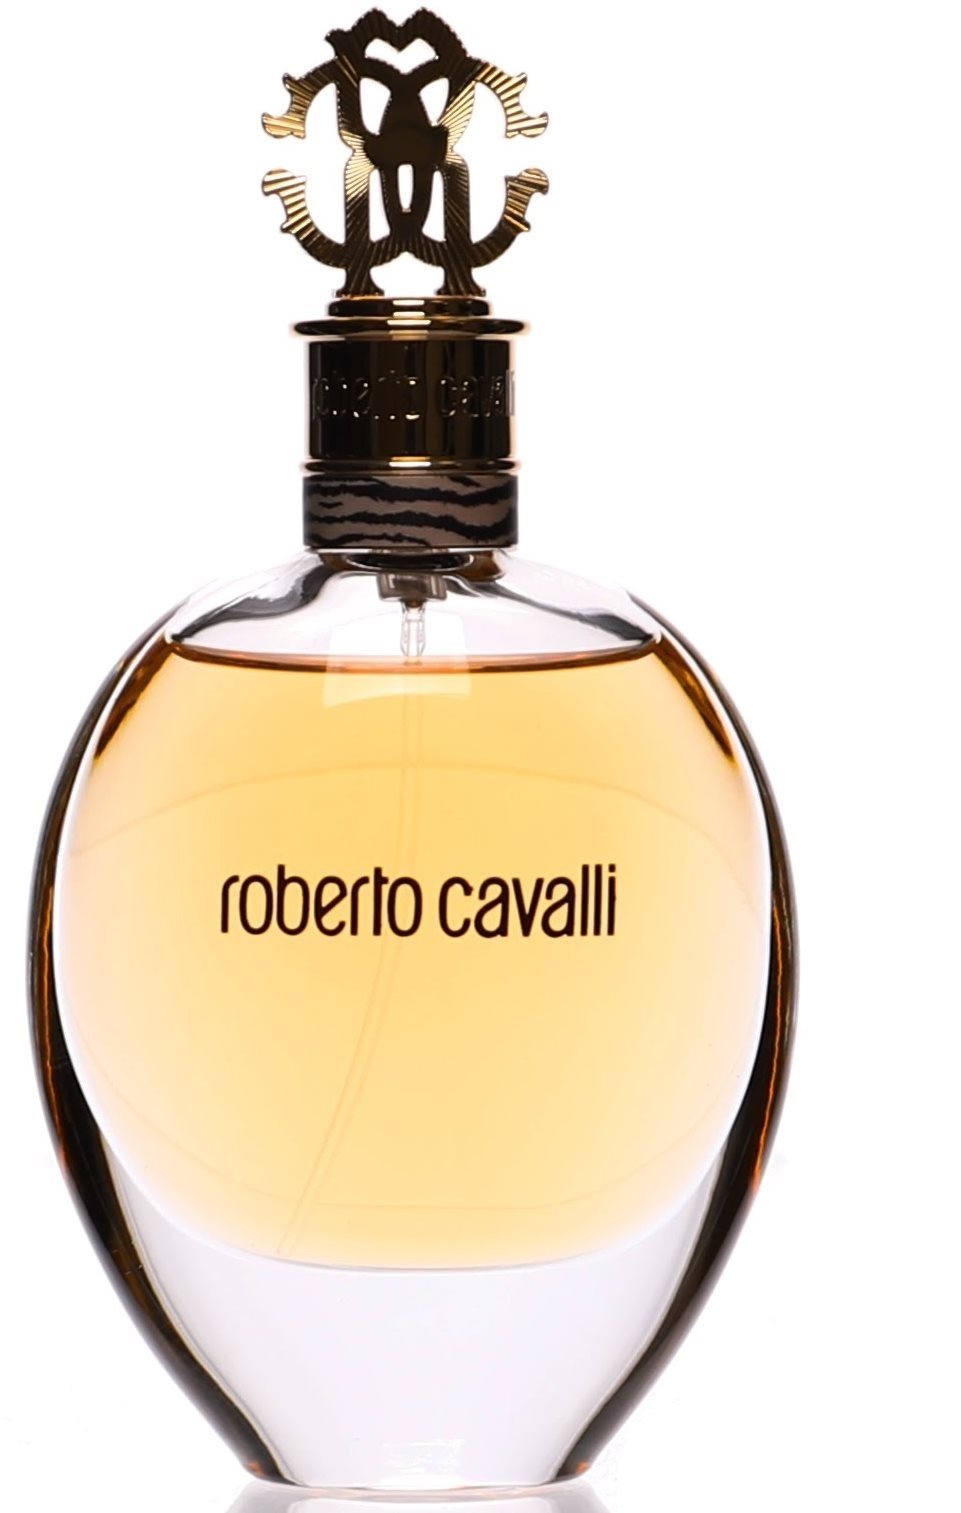 ROBERTO CAVALLI Roberto Cavalli Eau de Parfum EdP